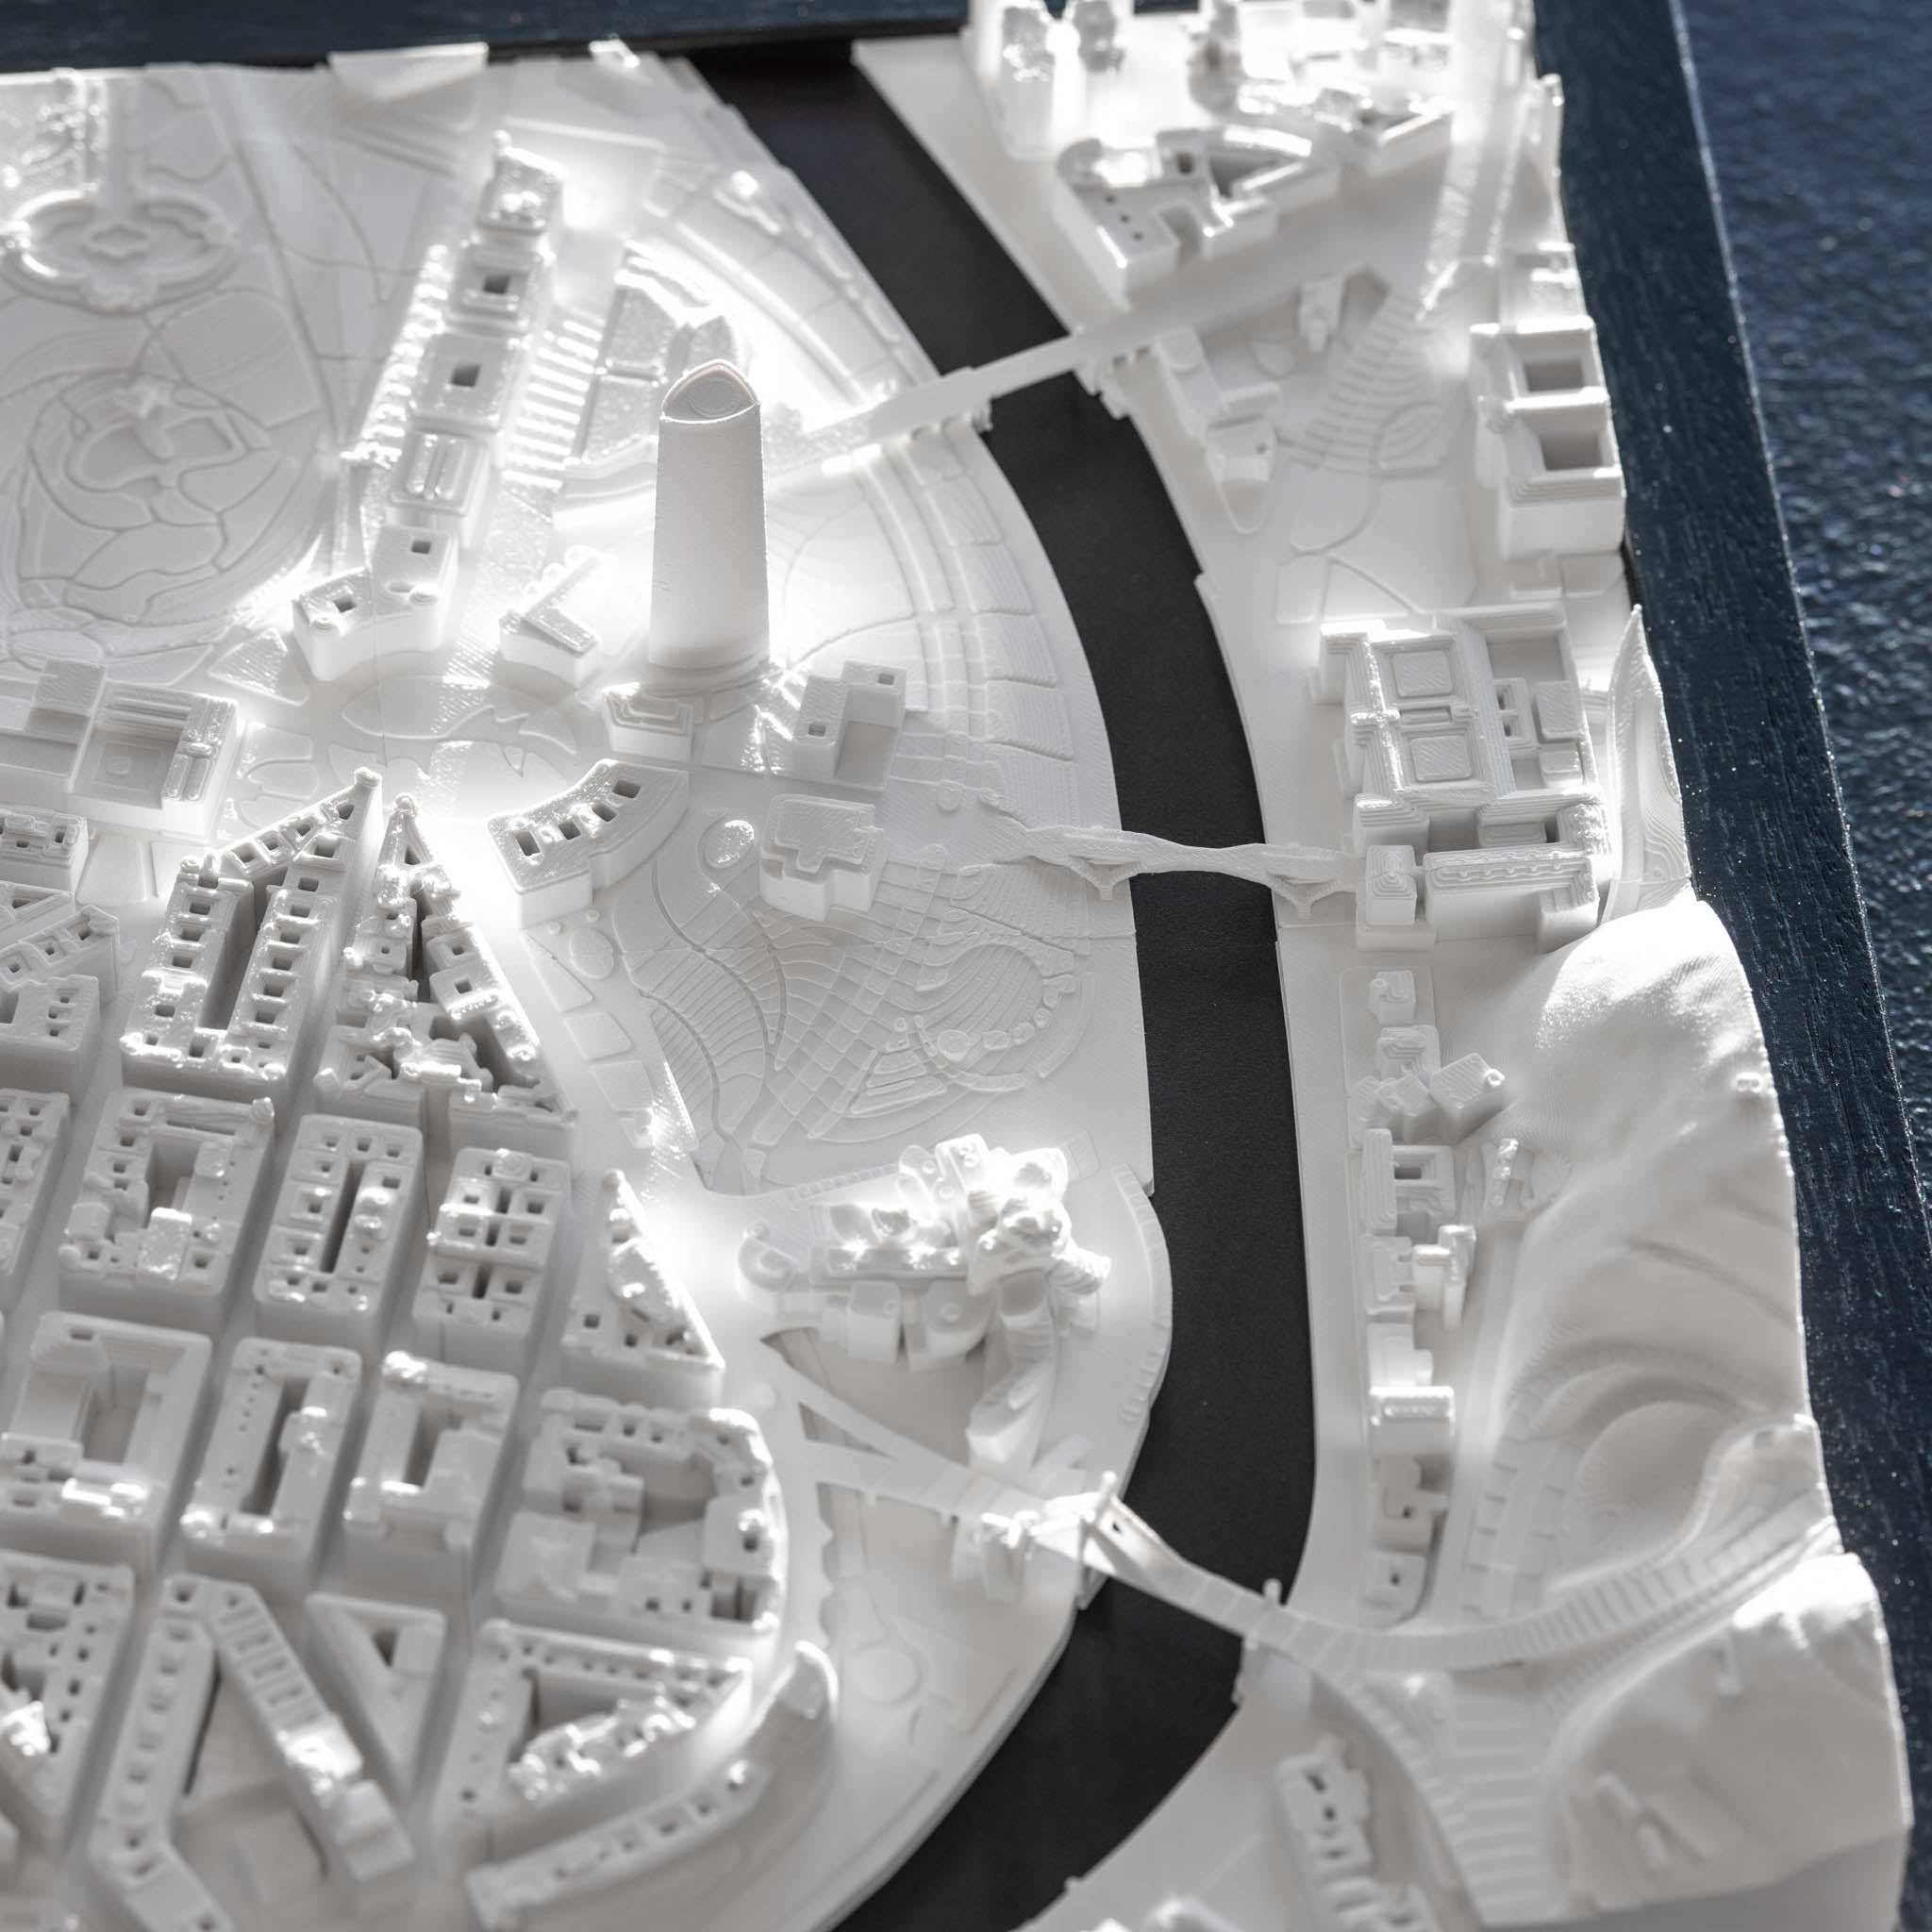 Bilbao Frame 3D City Model - CITYFRAMES